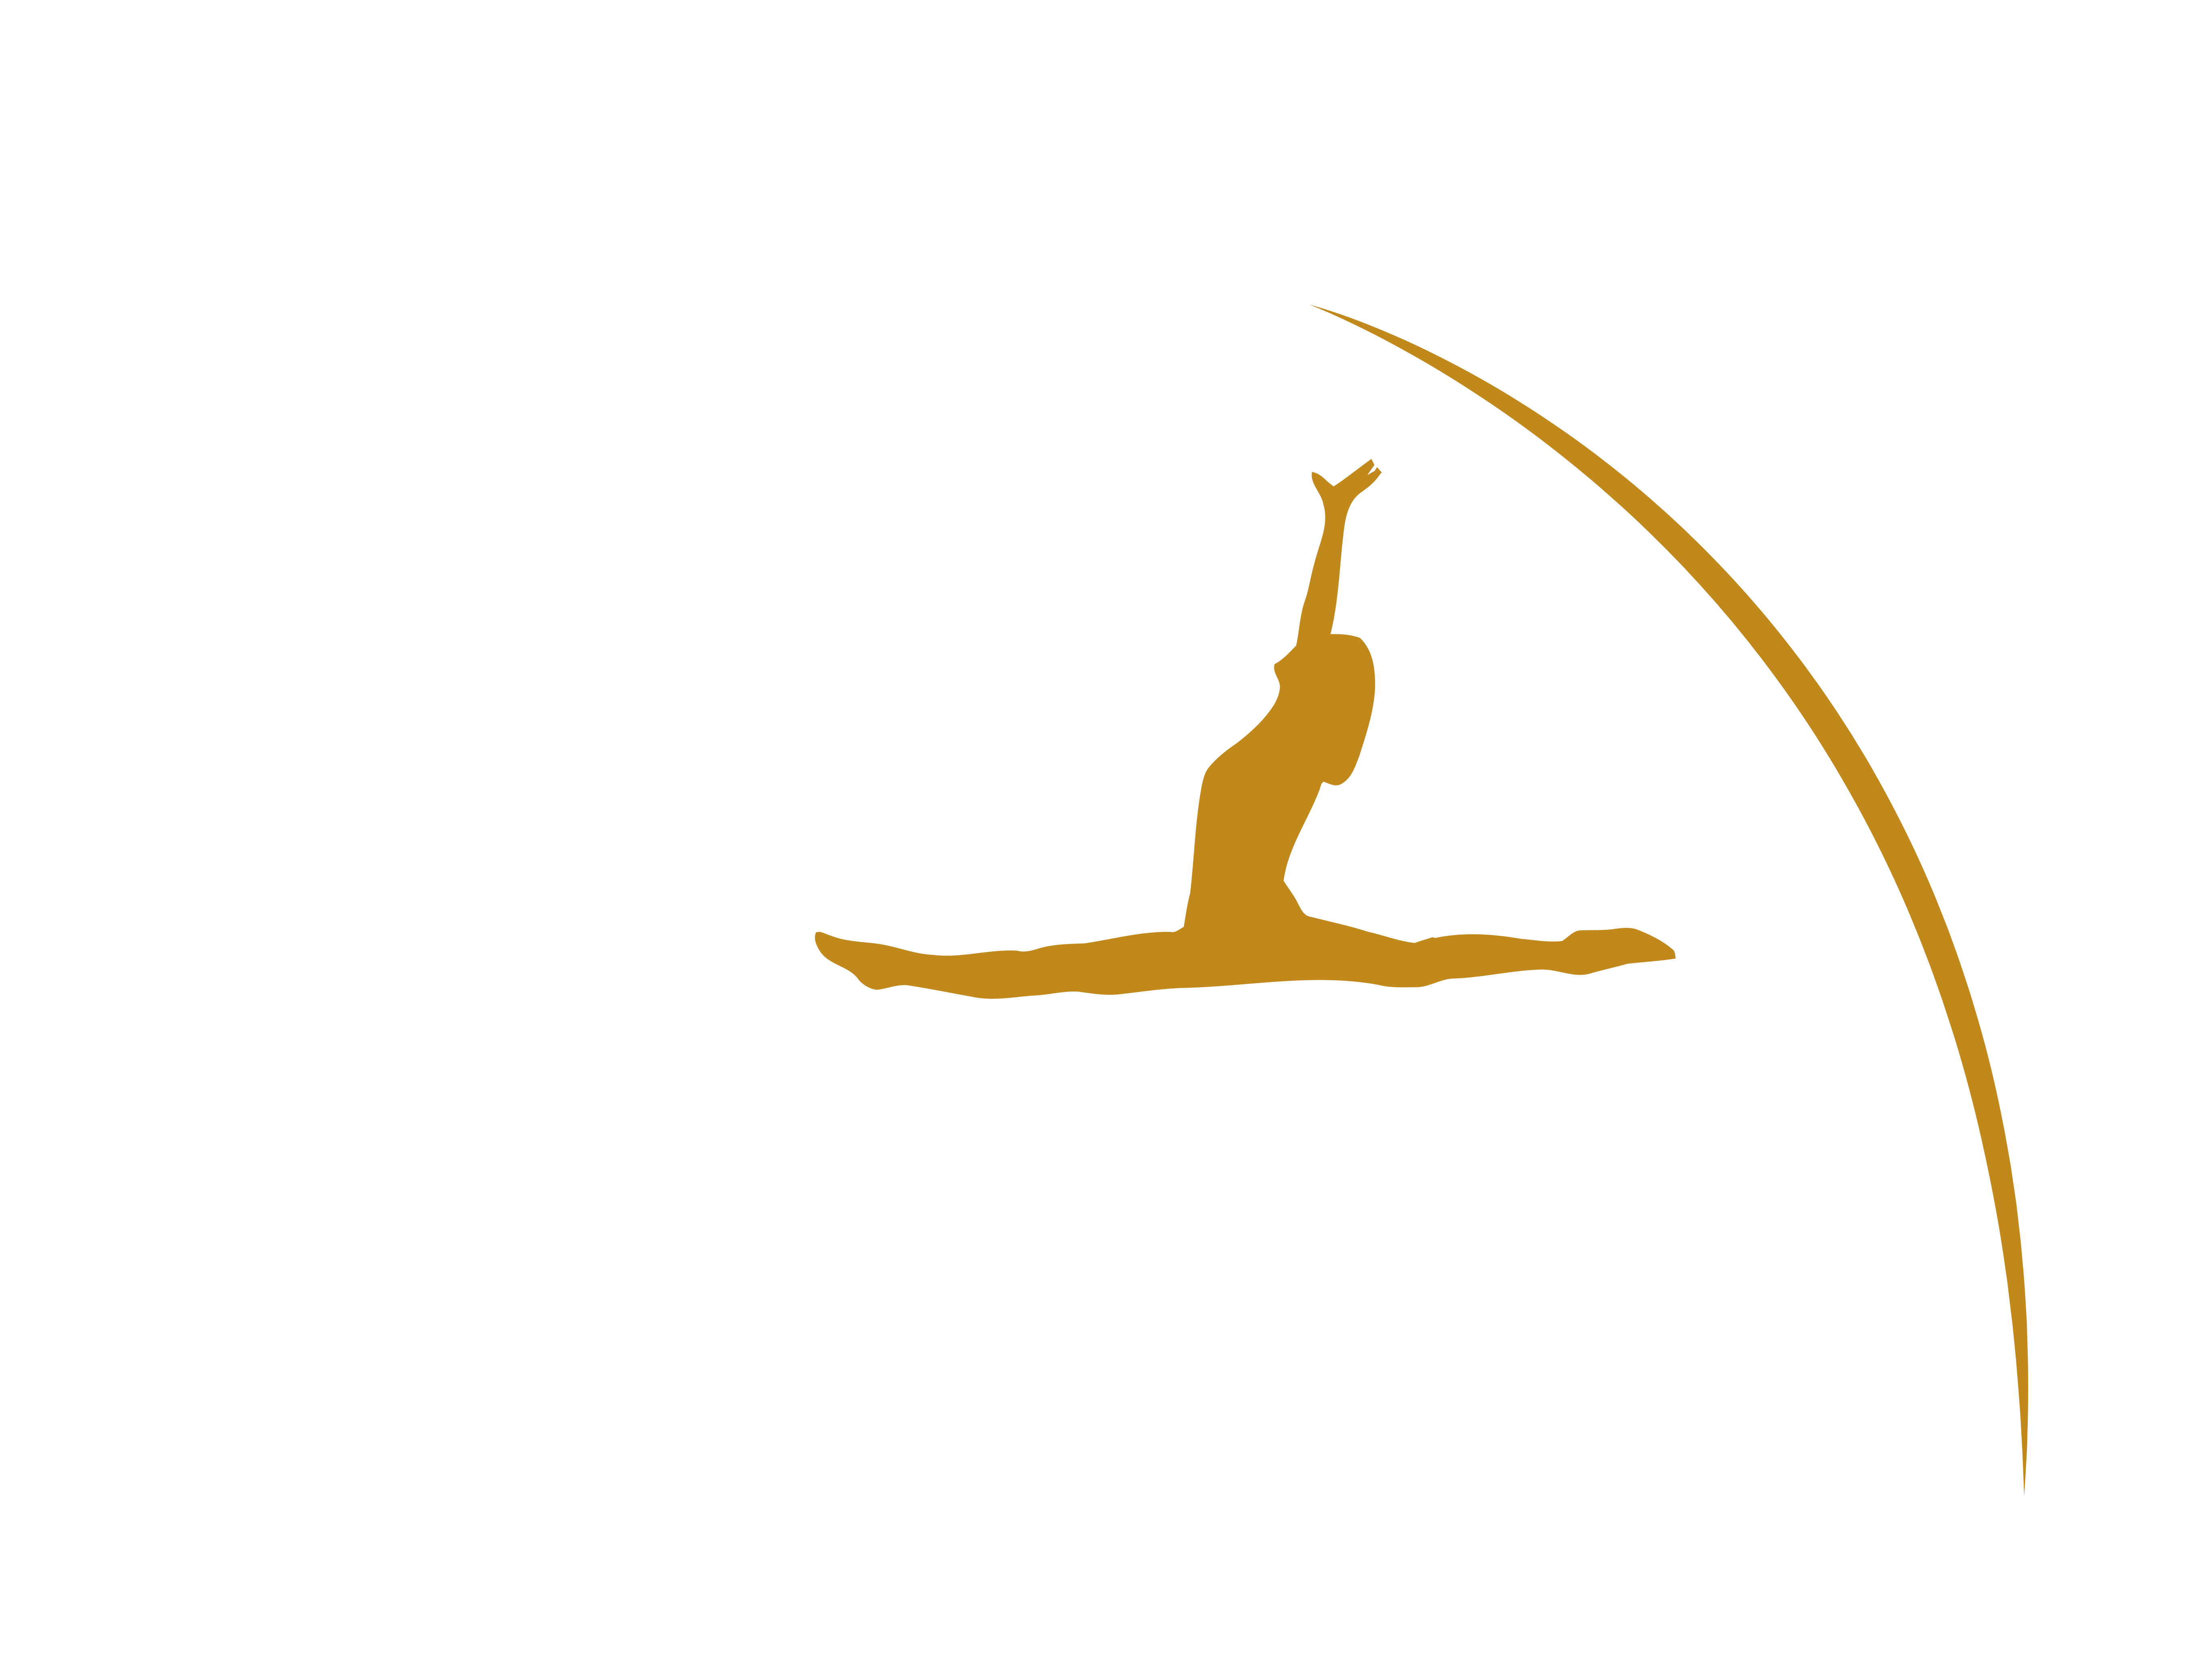 Aspire-Acrobatics  –  HOMEPAGE in Überarbeitung